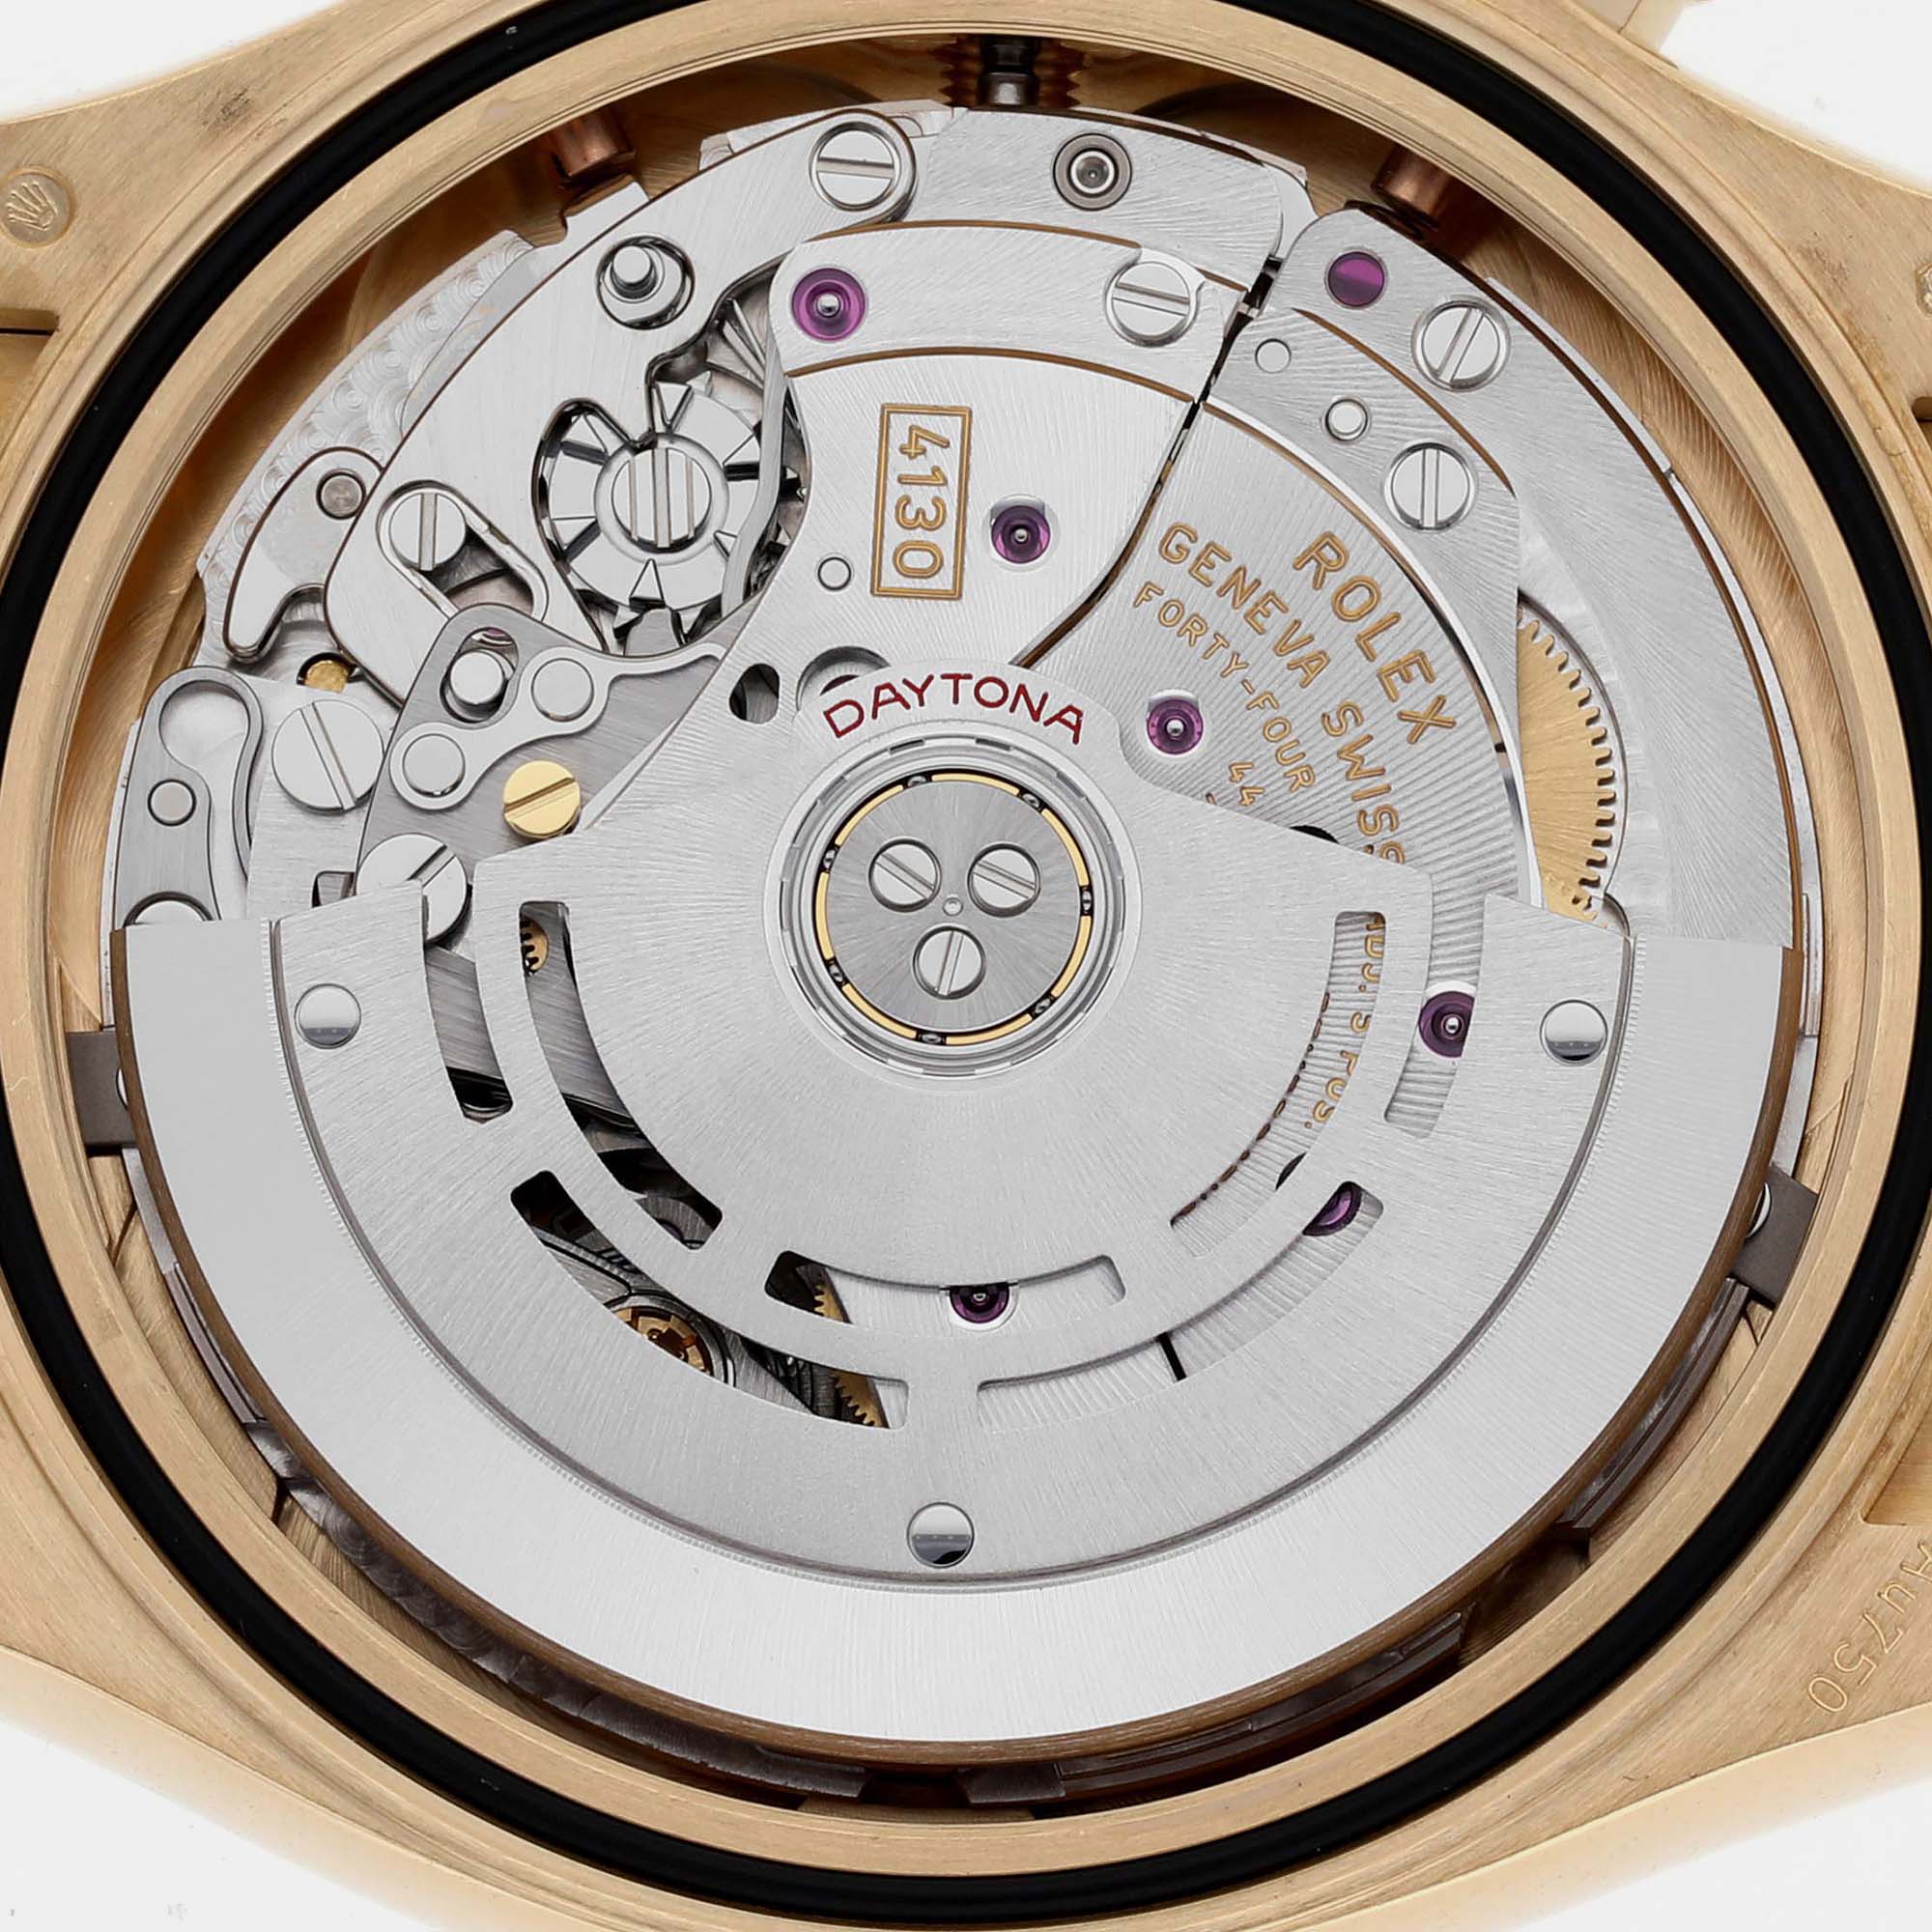 Rolex Daytona Yellow Gold Black Dial Ceramic Bezel Men's Watch 116518 40 Mm